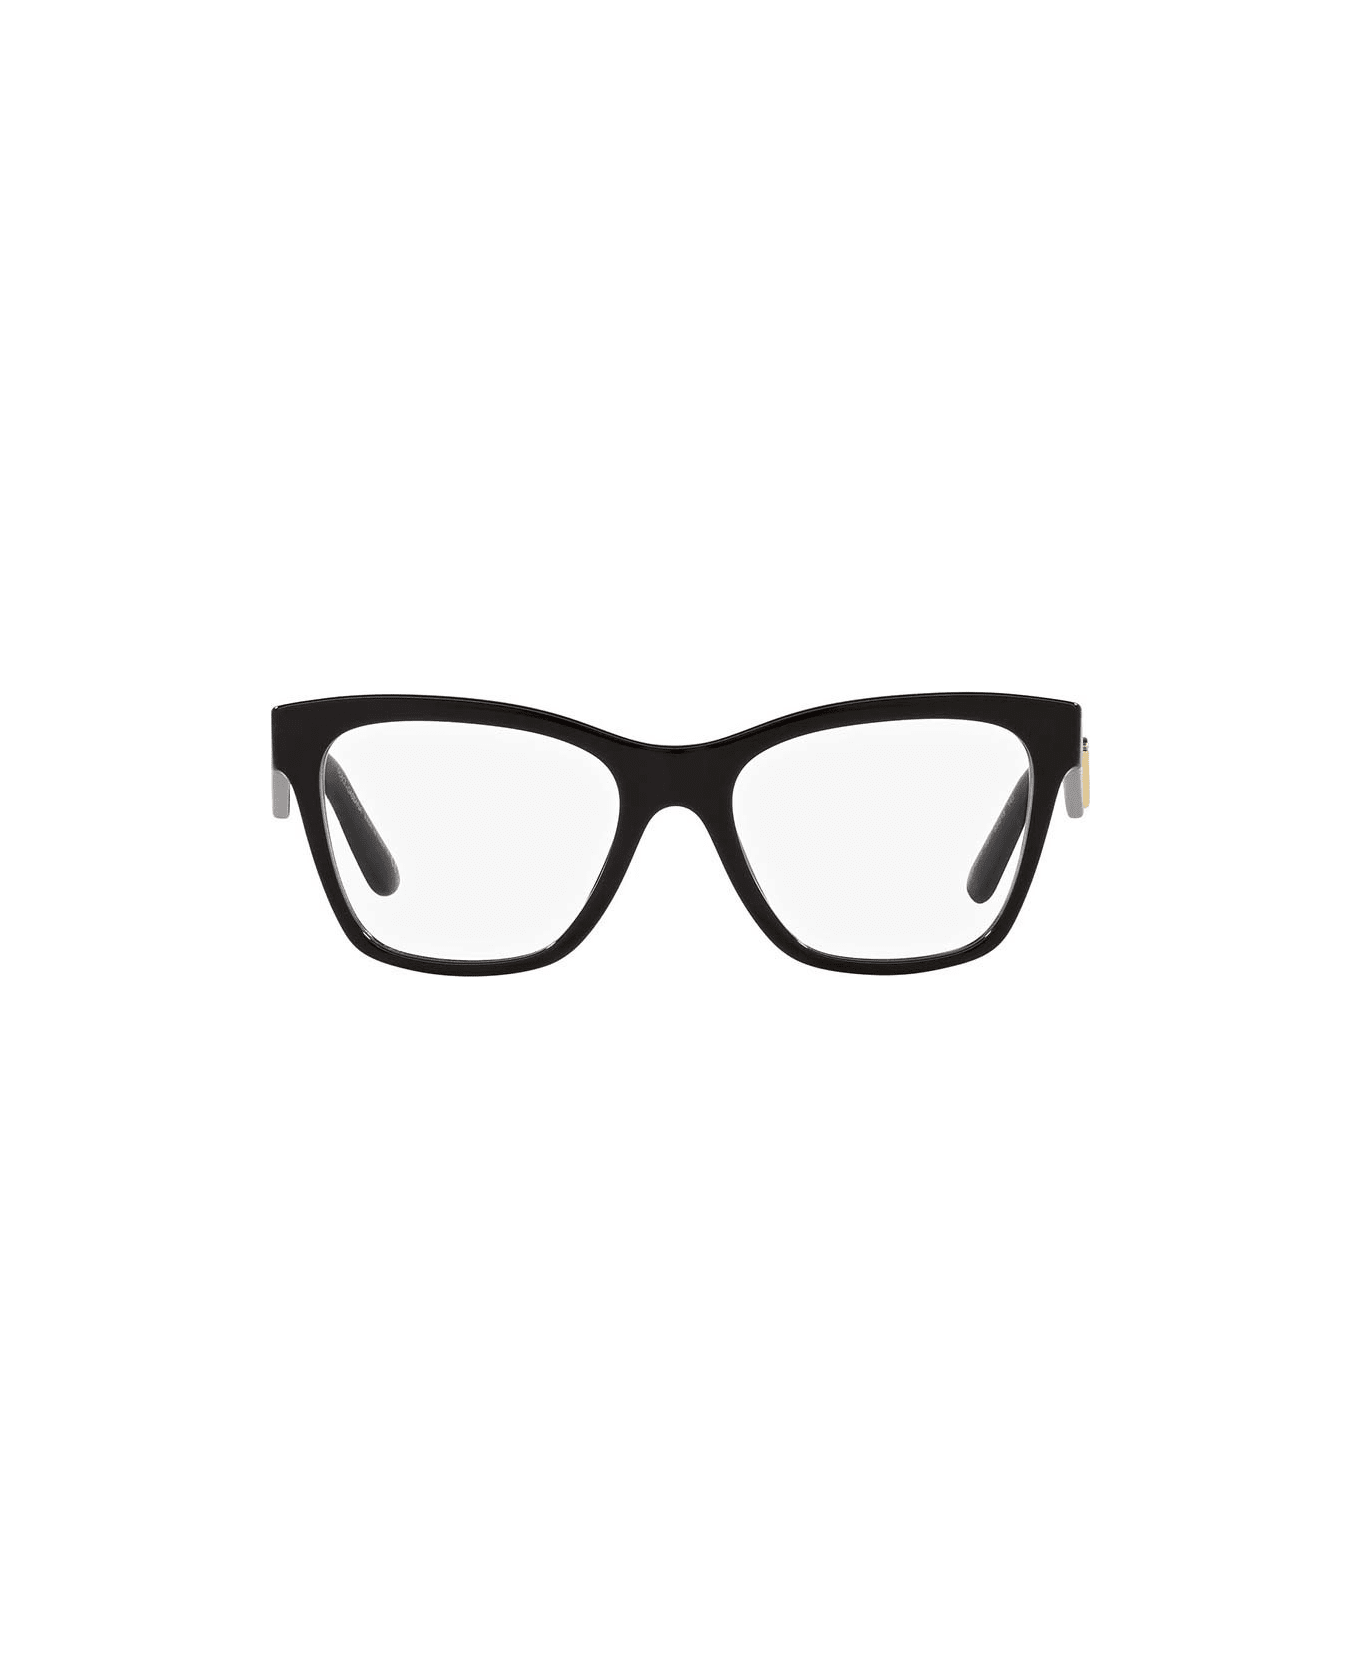 Dolce & Gabbana 'sicily' Leather Tote Bag Eyewear Glasses - Nero